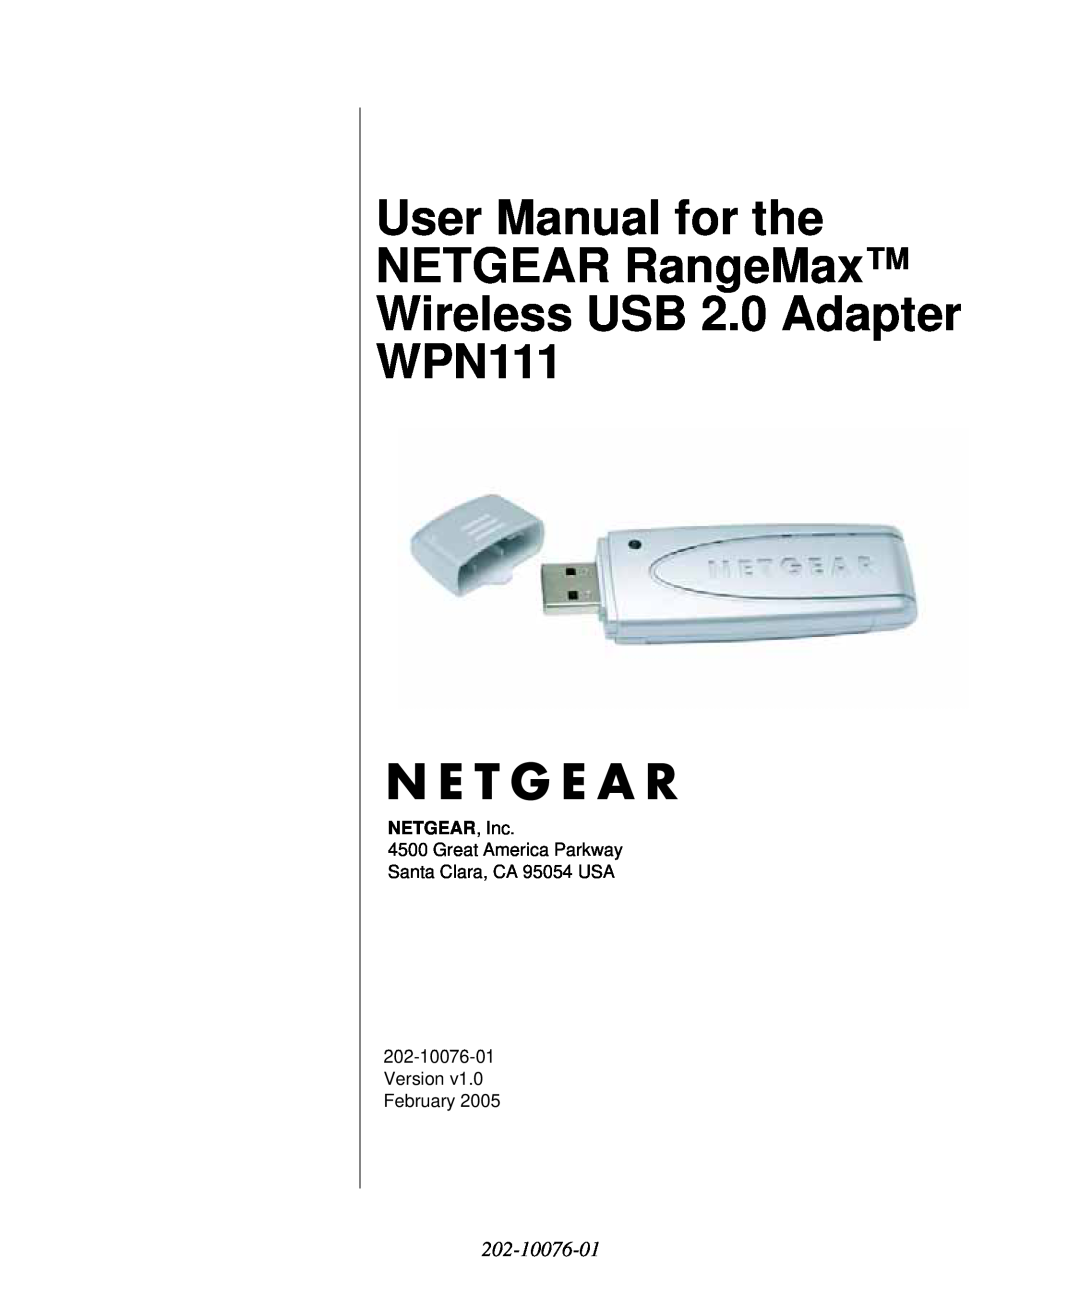 NETGEAR user manual User Manual for the NETGEAR RangeMax Wireless USB 2.0 Adapter WPN111, 202-10076-01, NETGEAR, I n c 